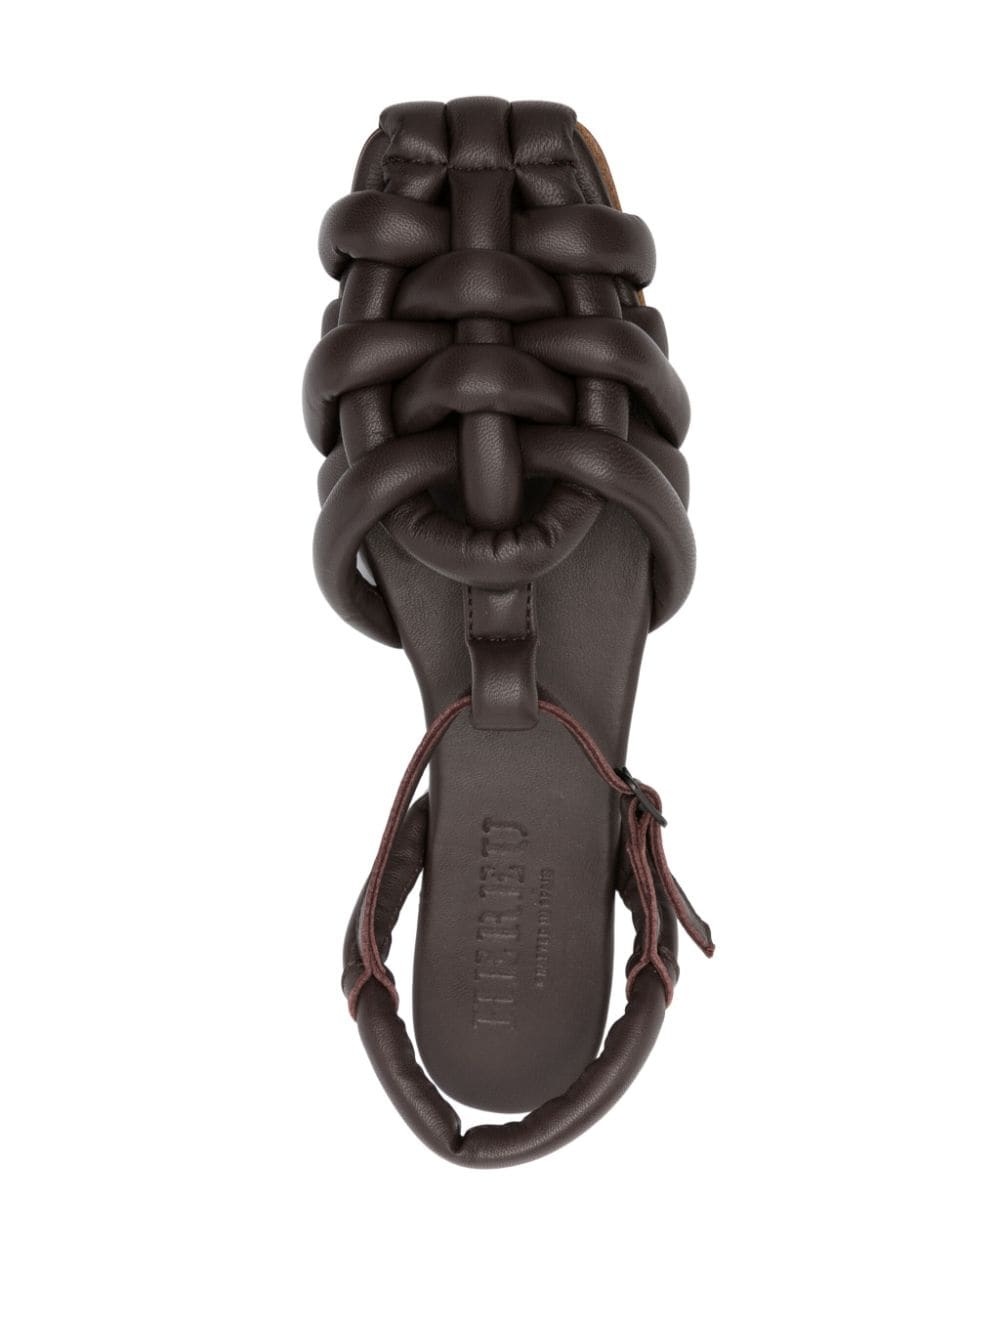 Cabersa pebbled leather sandals - 4